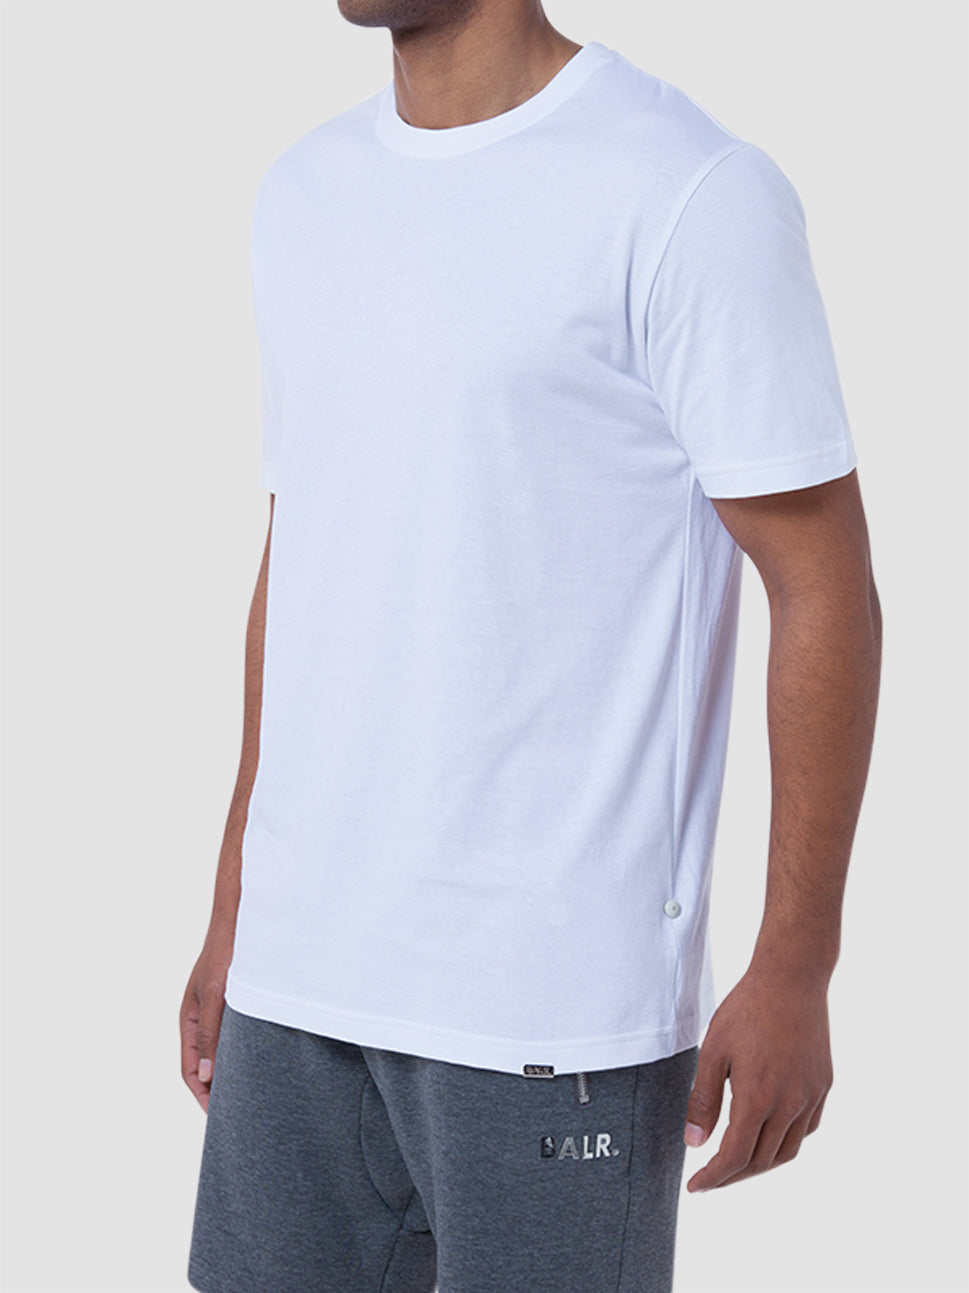 Balr Classic Metal Clip Straight Fit T Shirt Bright White B1112.1022